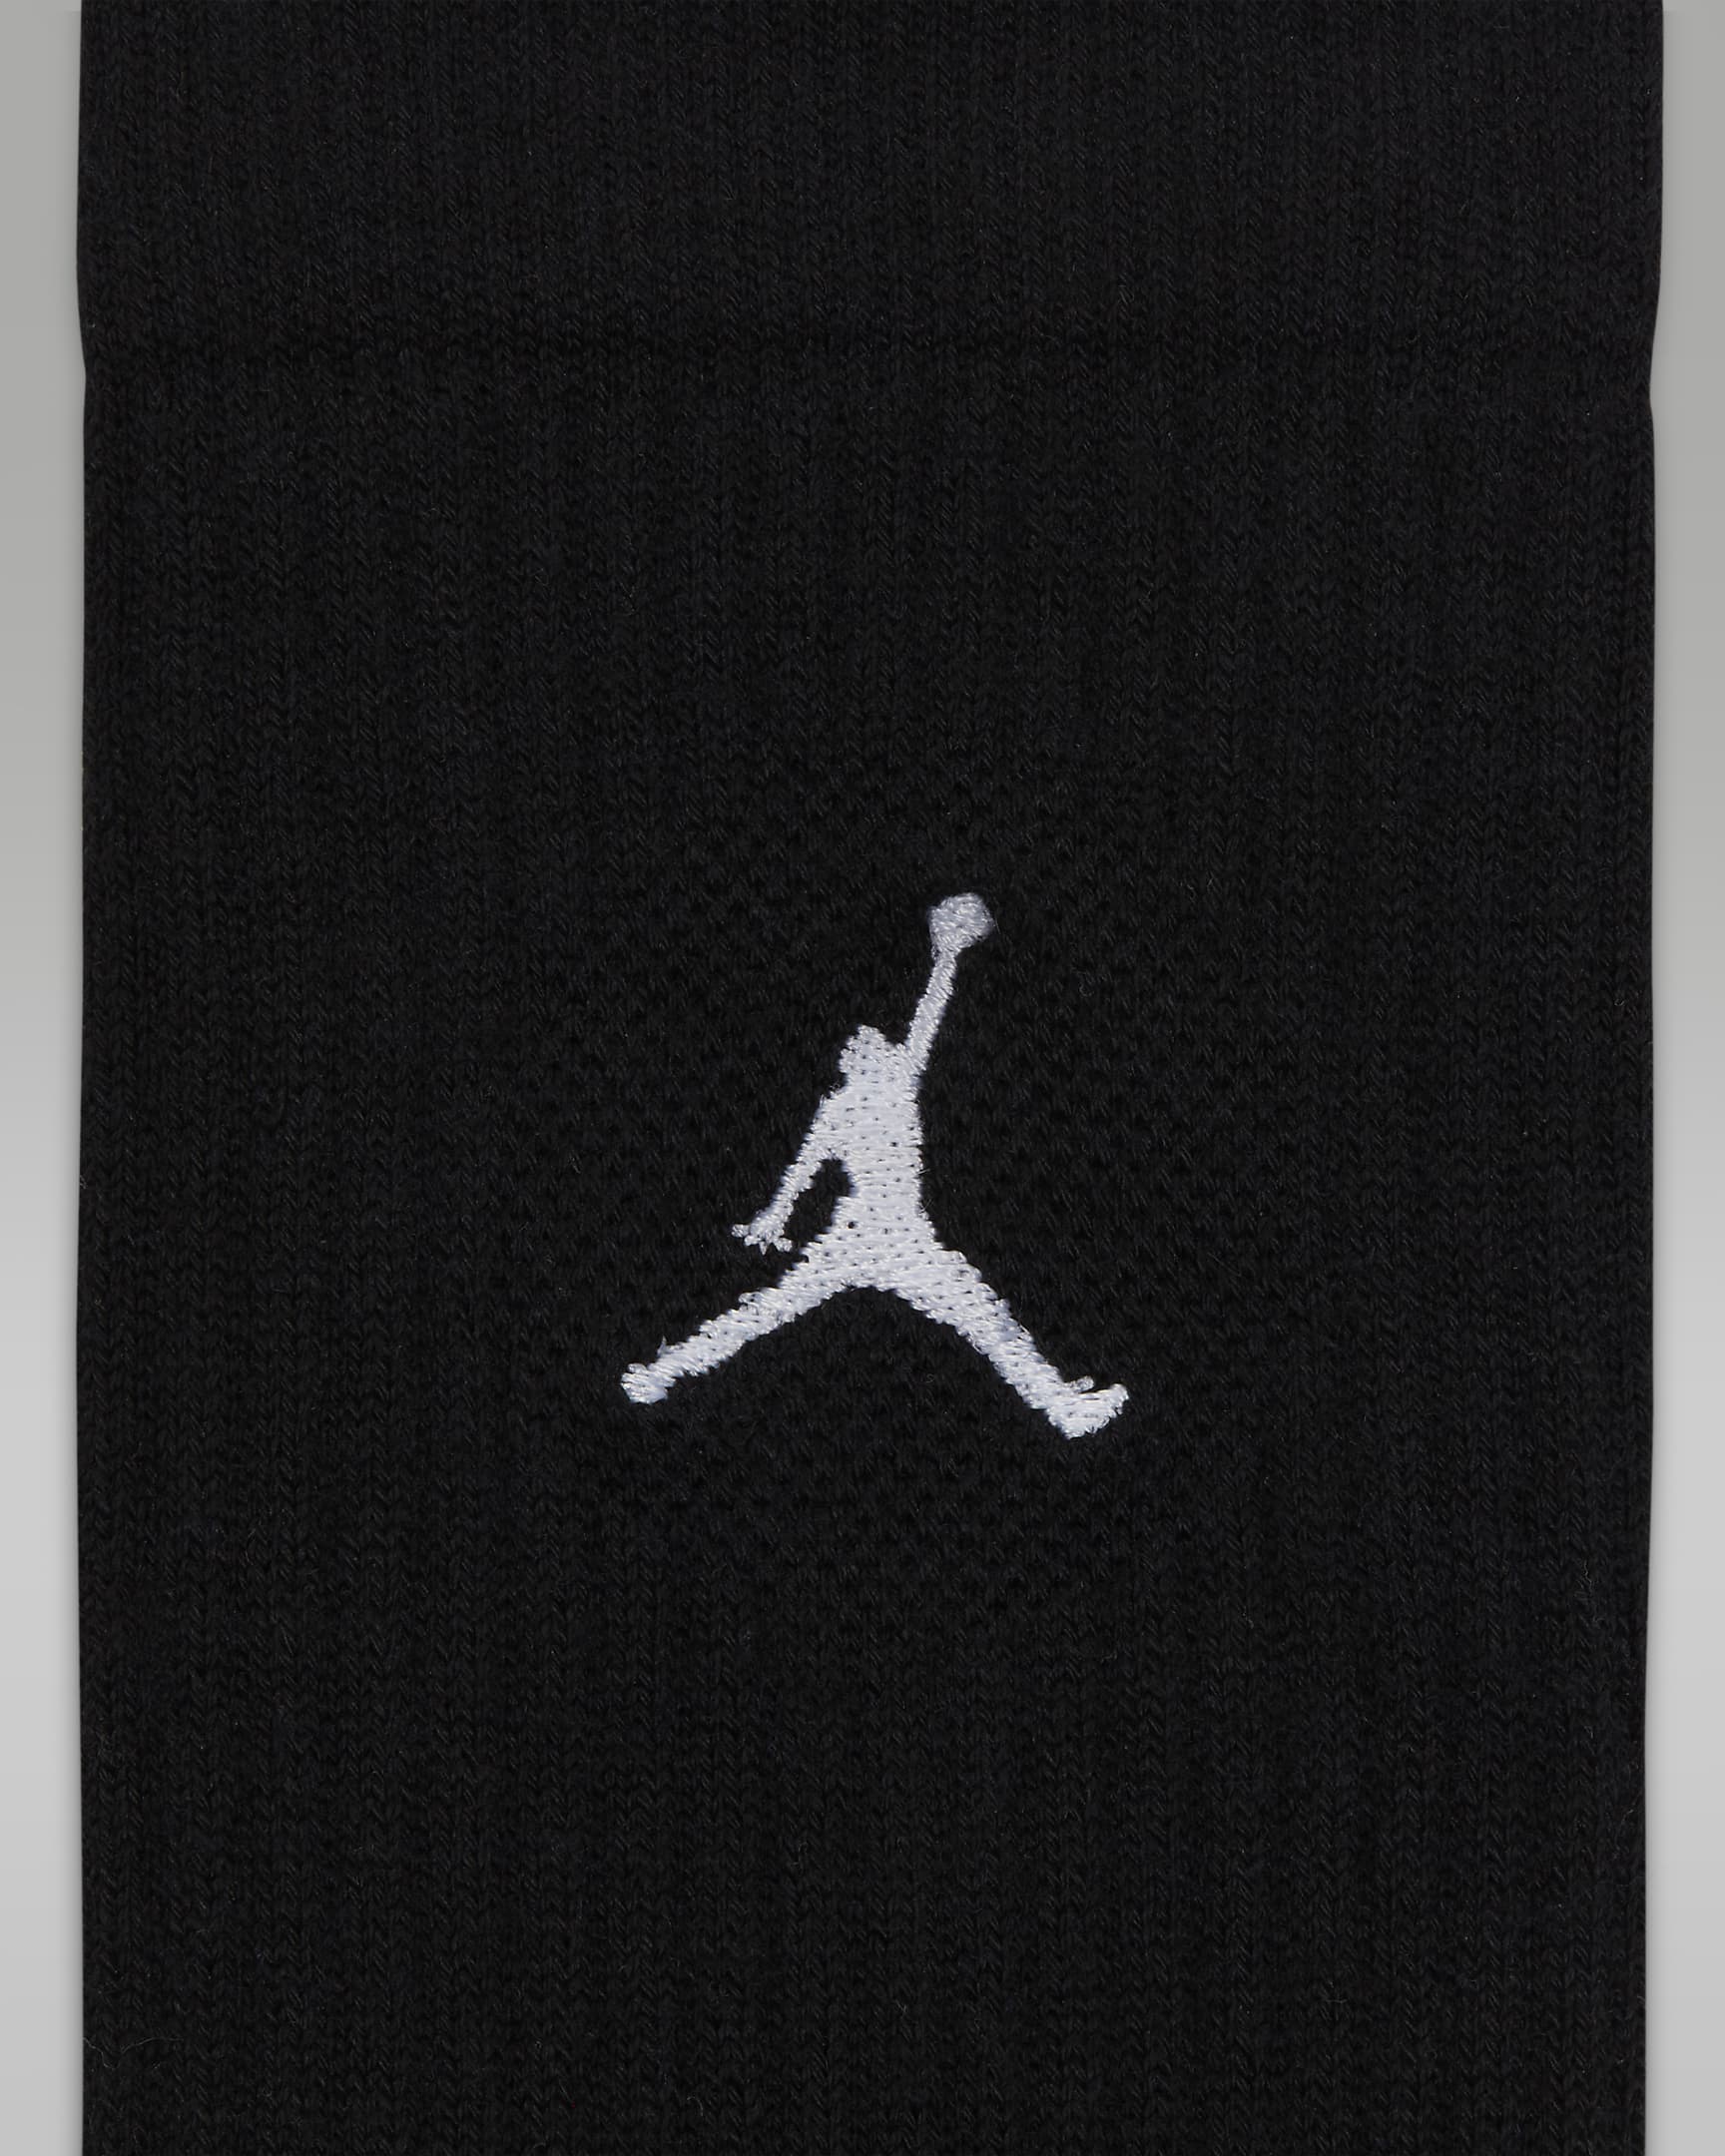 Jordan Everyday Crew Socks (3 pairs). Nike.com